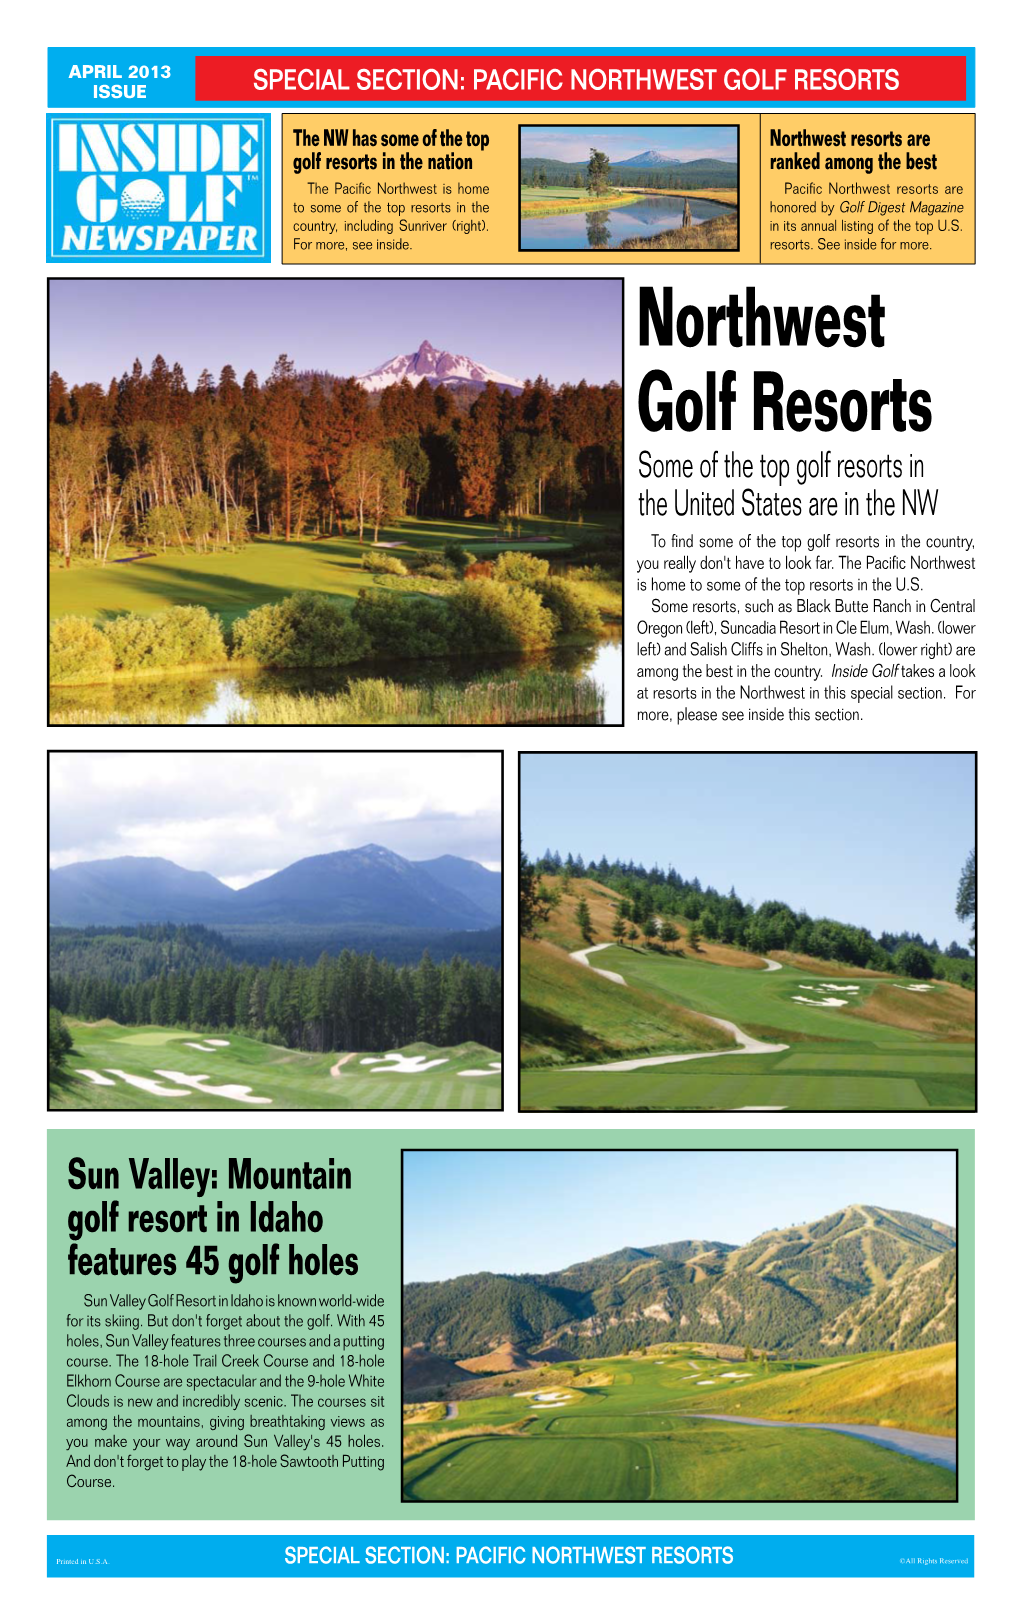 Northwest Golf Resorts